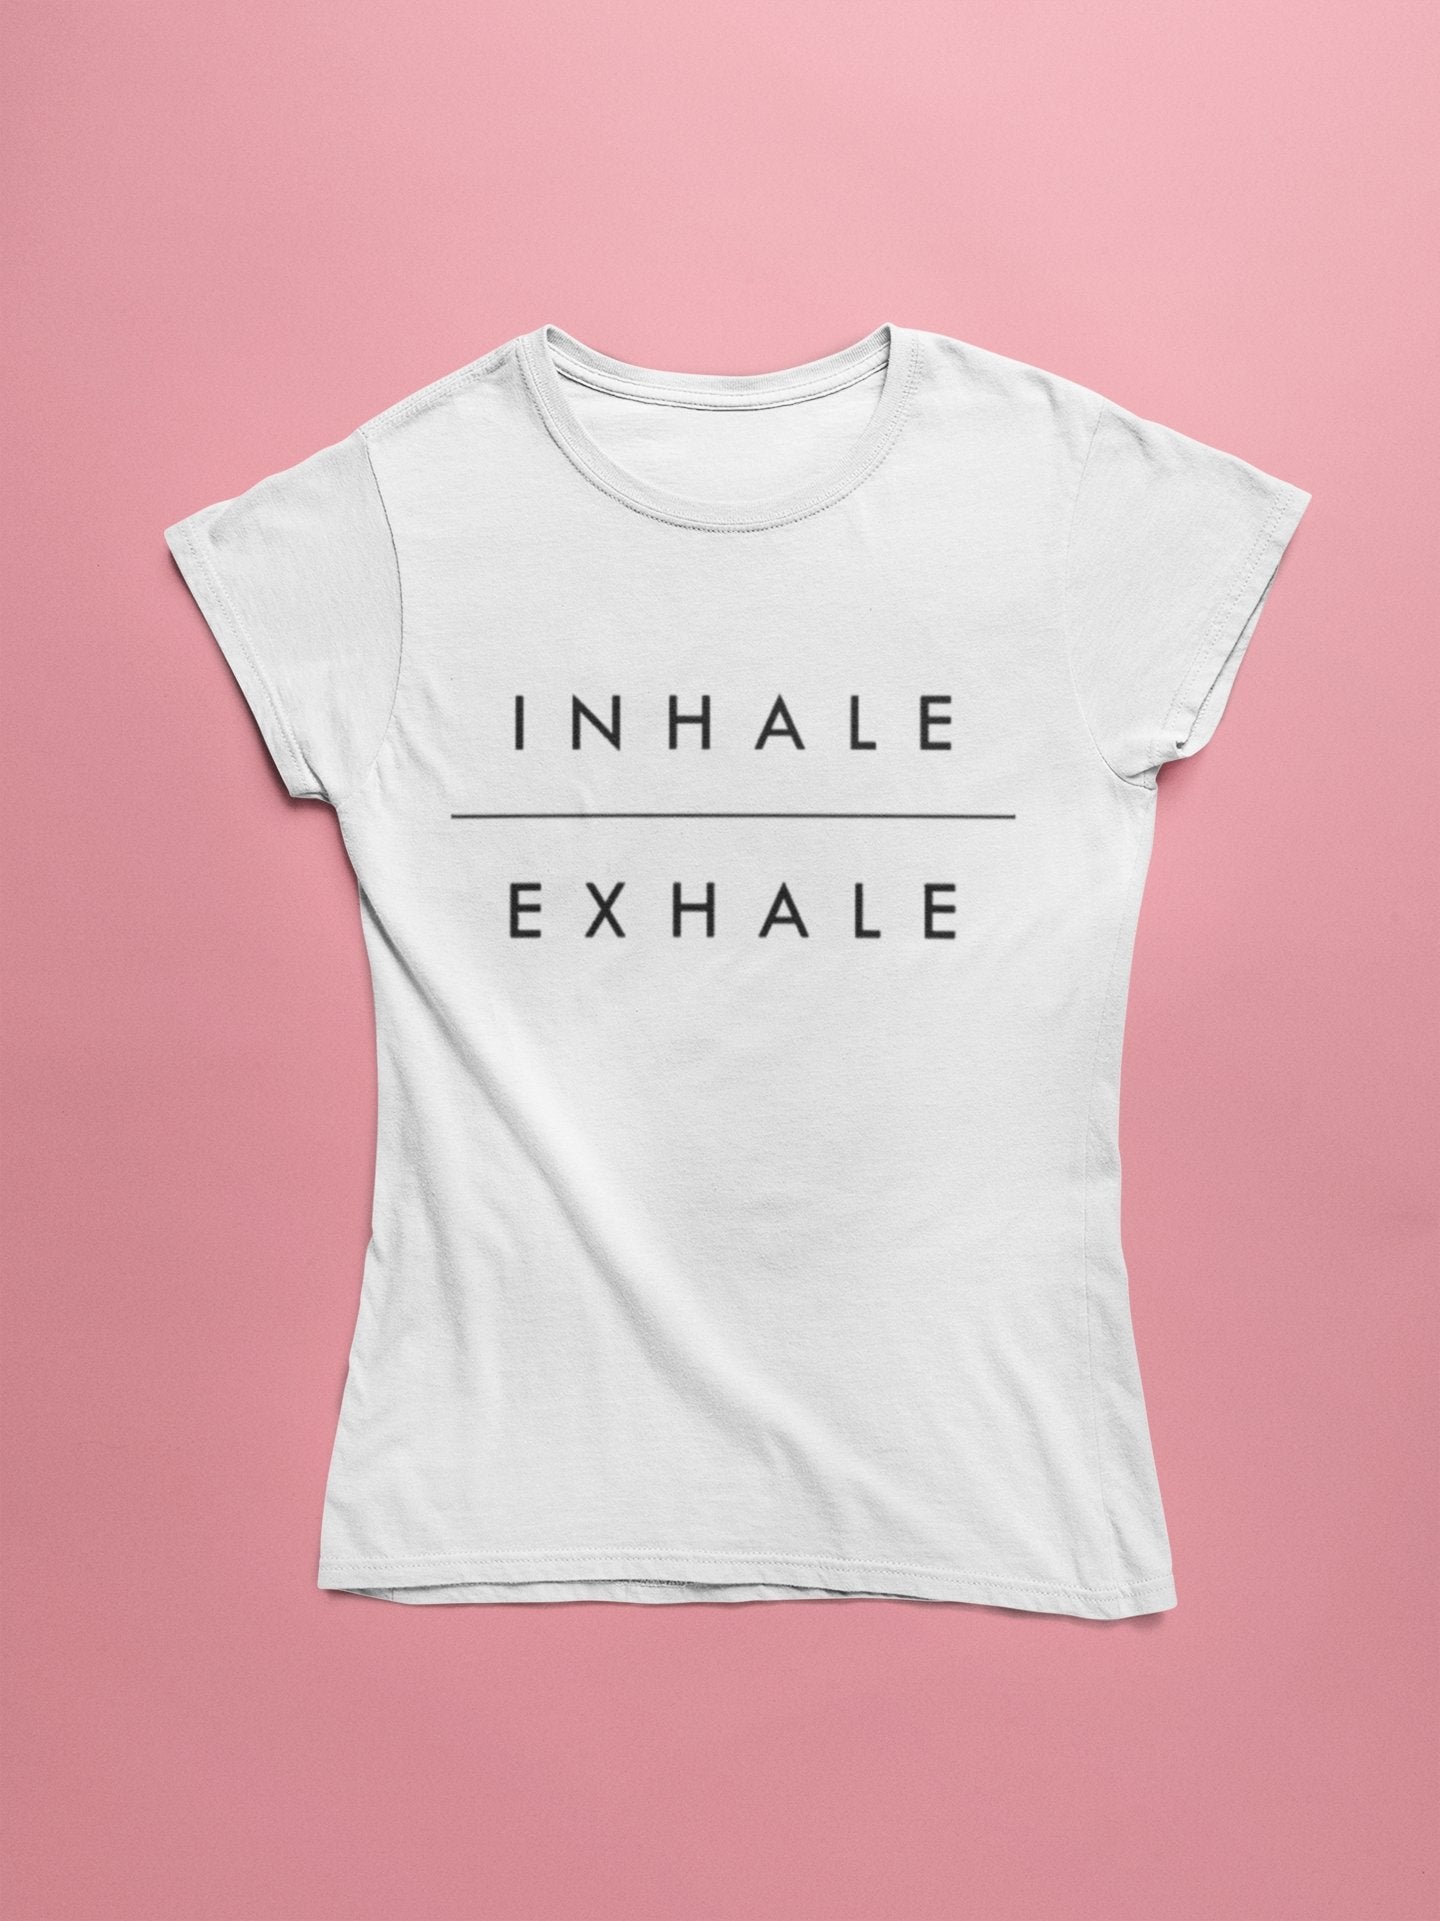 Inhale Exhale Yoga Tees for women - Insane Tees